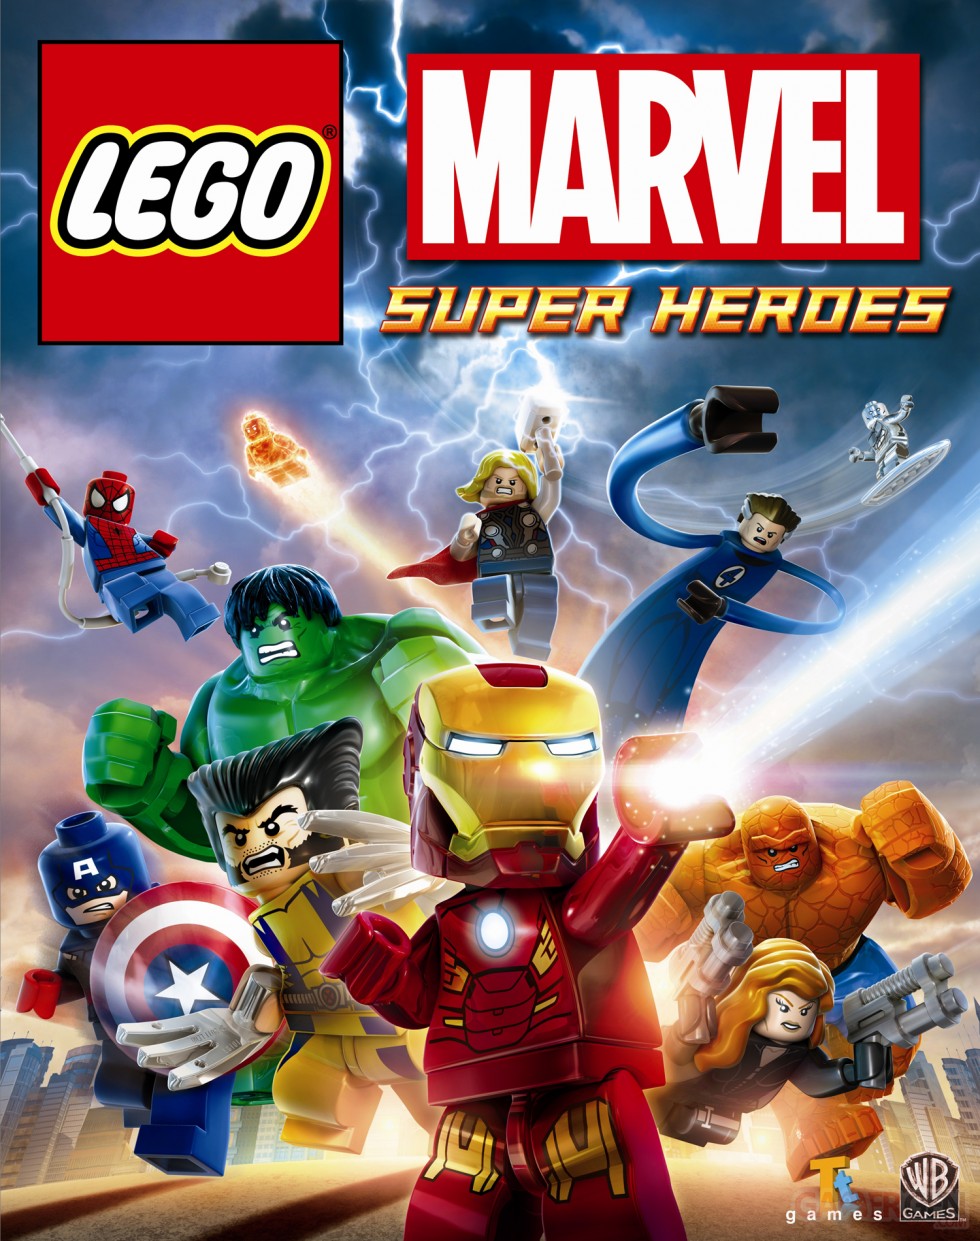 LEGO-Marvel-Super-Heroes_11-07-2013_box-art